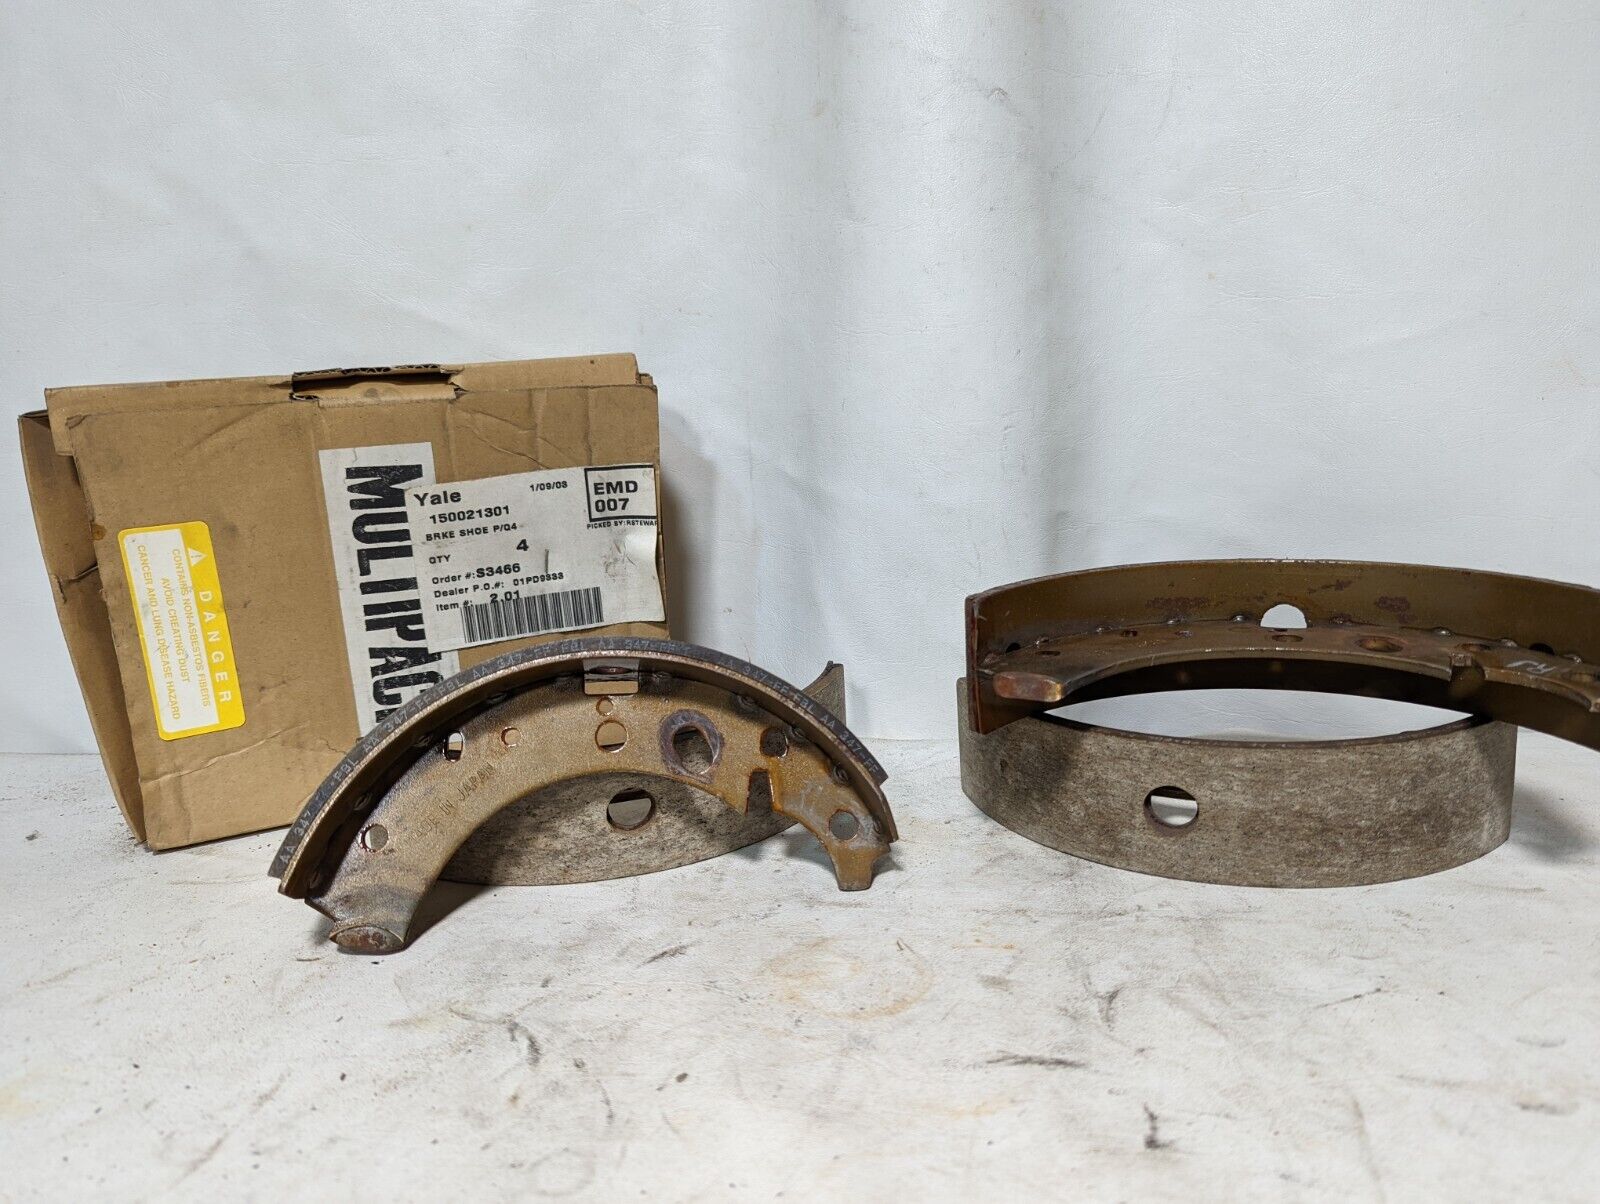 Yale 1500213-01 brake shoe assembly, 4 pieces